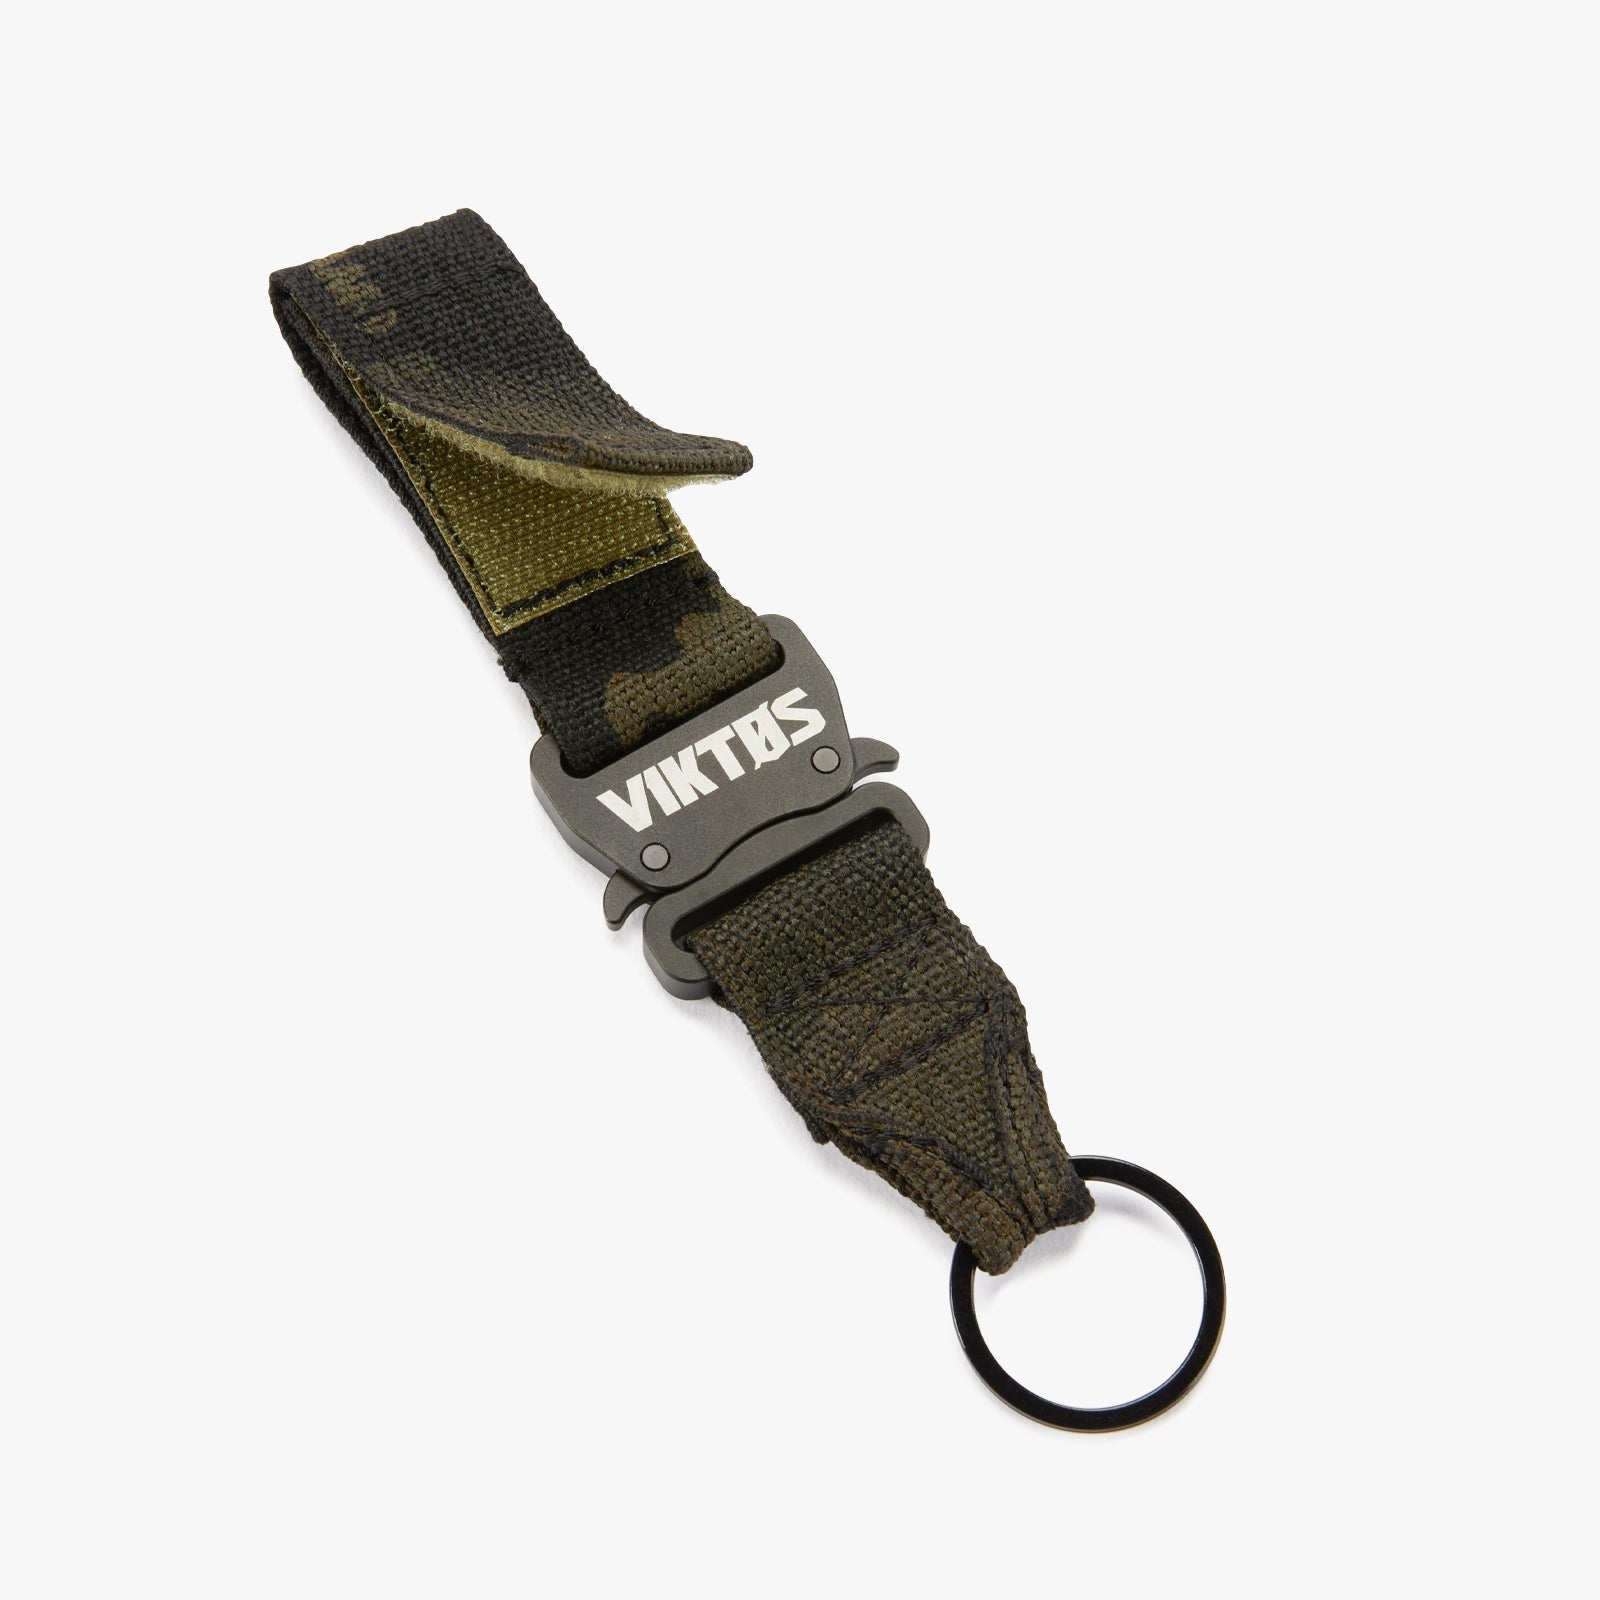 VIKTOS Bulldog Keychain Accessories VIKTOS Multicam Black Tactical Gear Supplier Tactical Distributors Australia